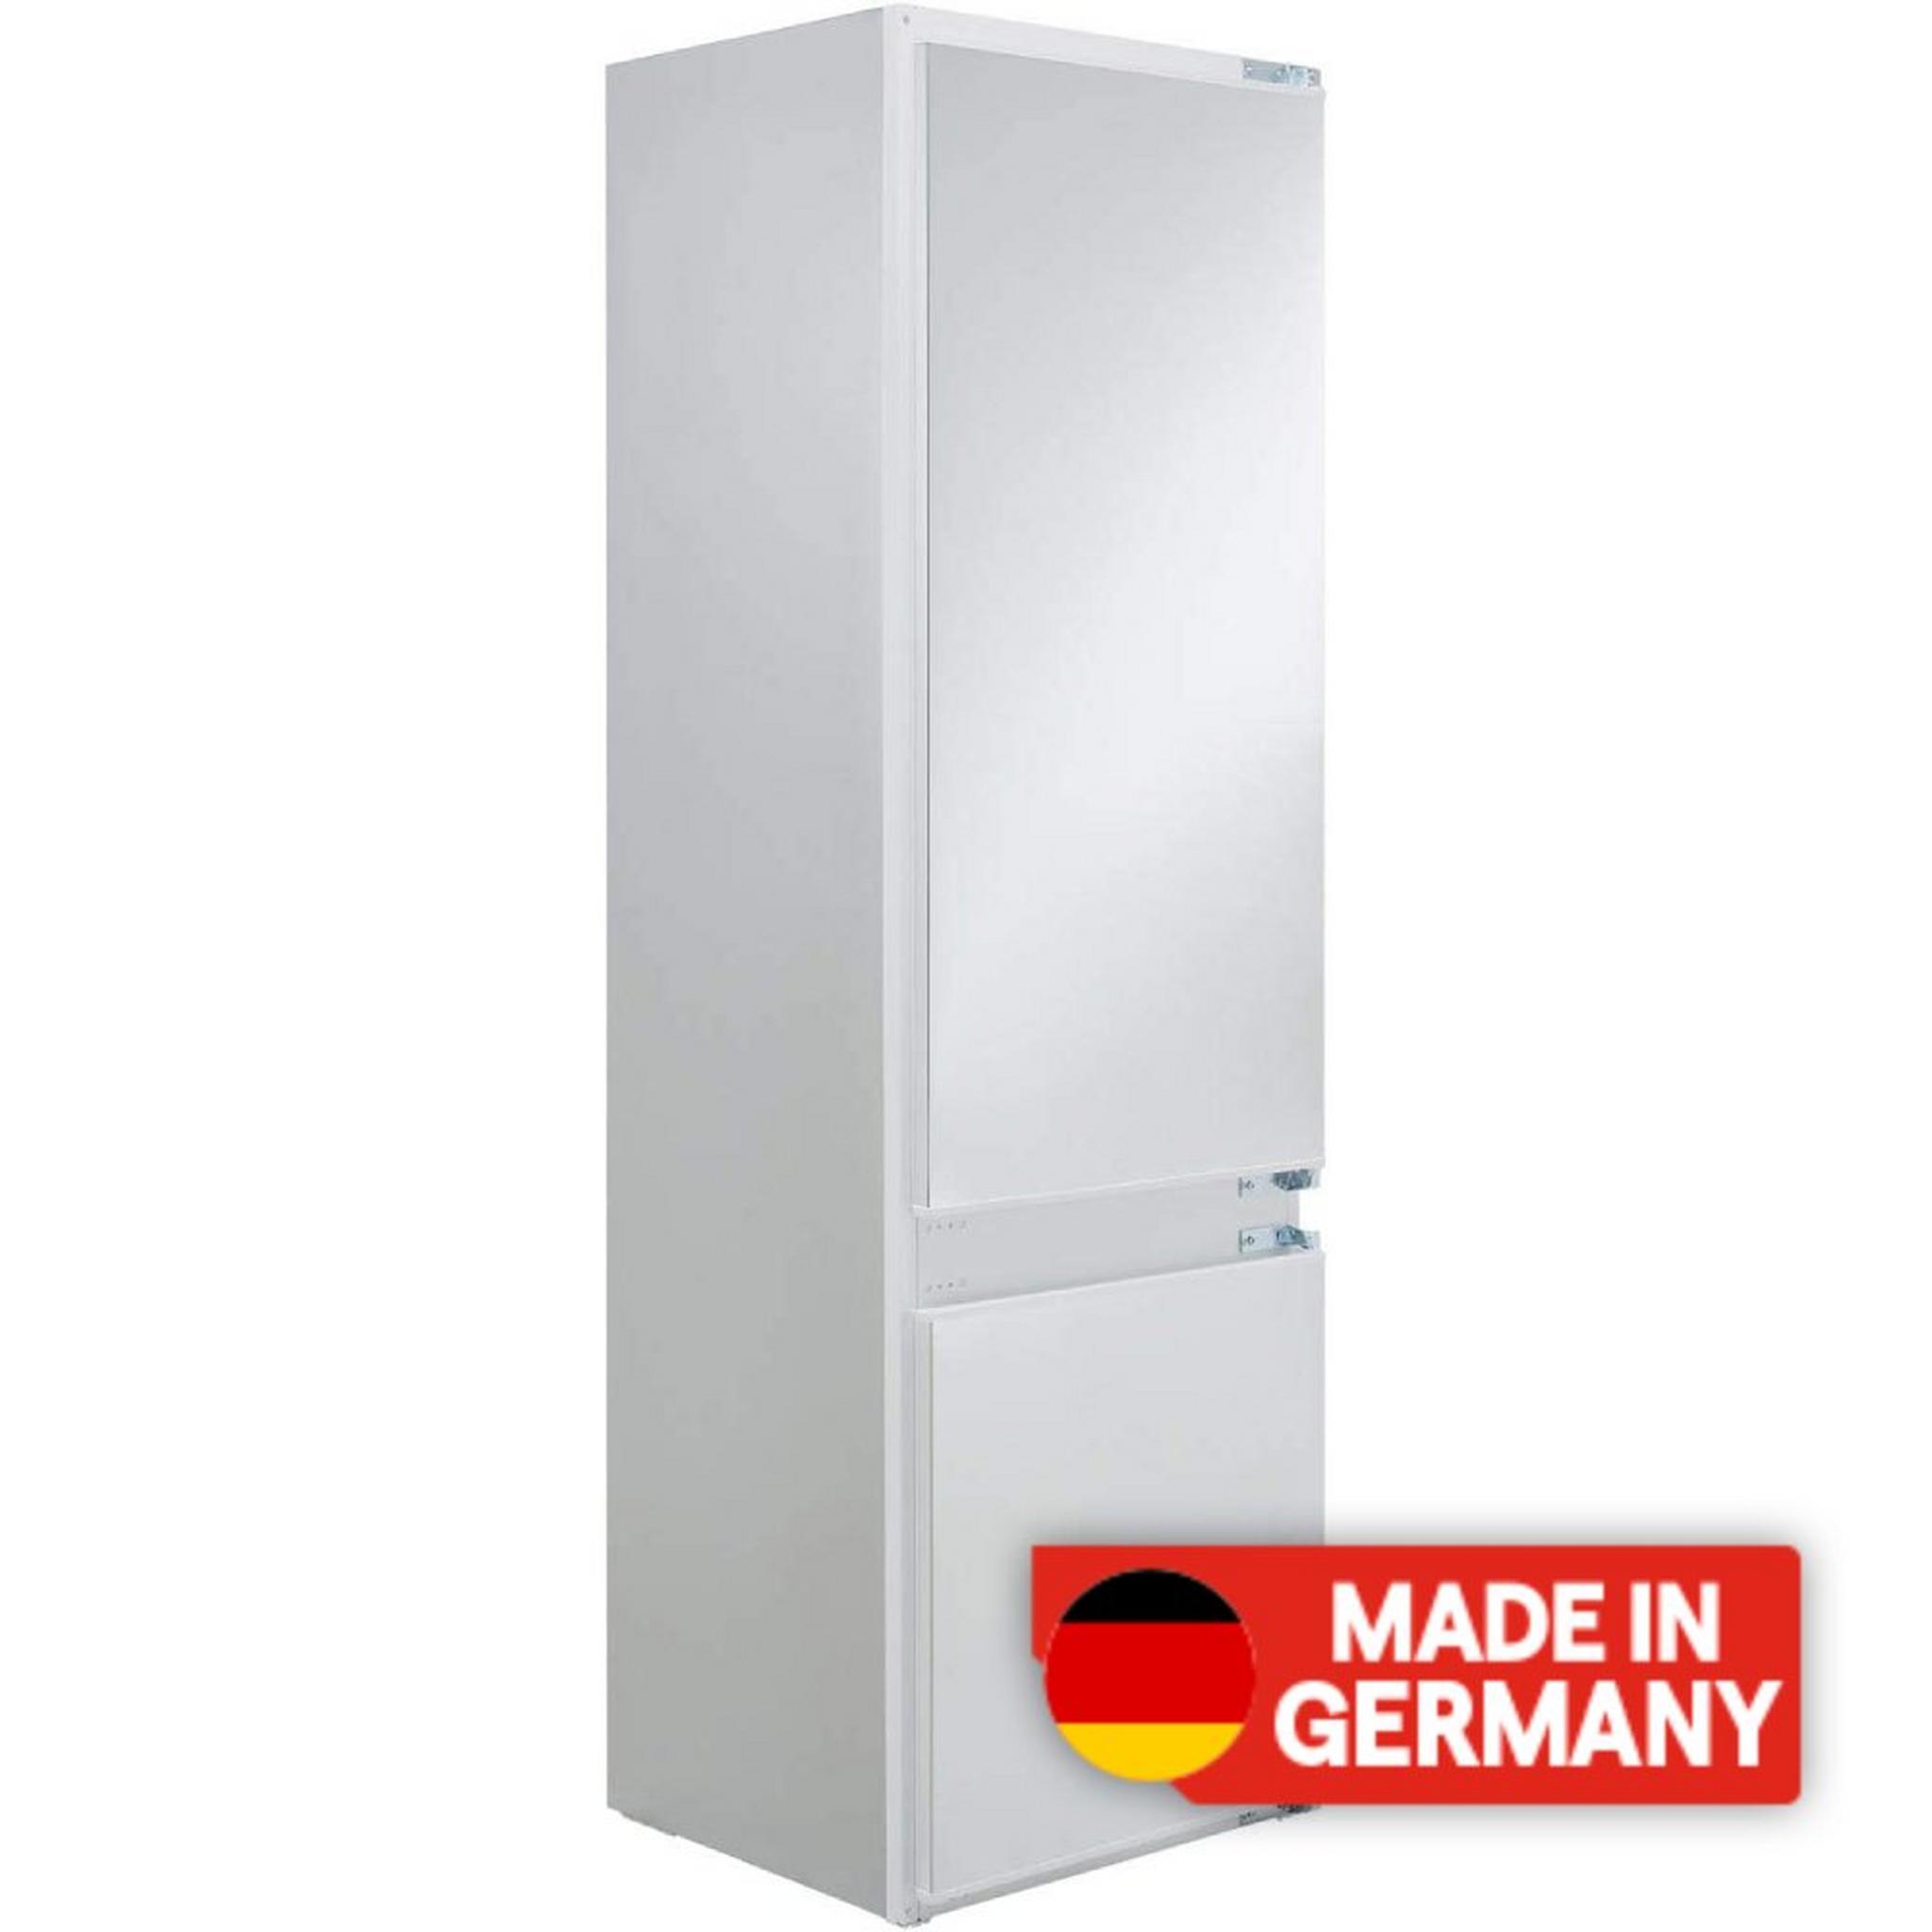 Bosch 10 CFT Built In Bottom Mount Refrigerator - White (KIV38X22GB)